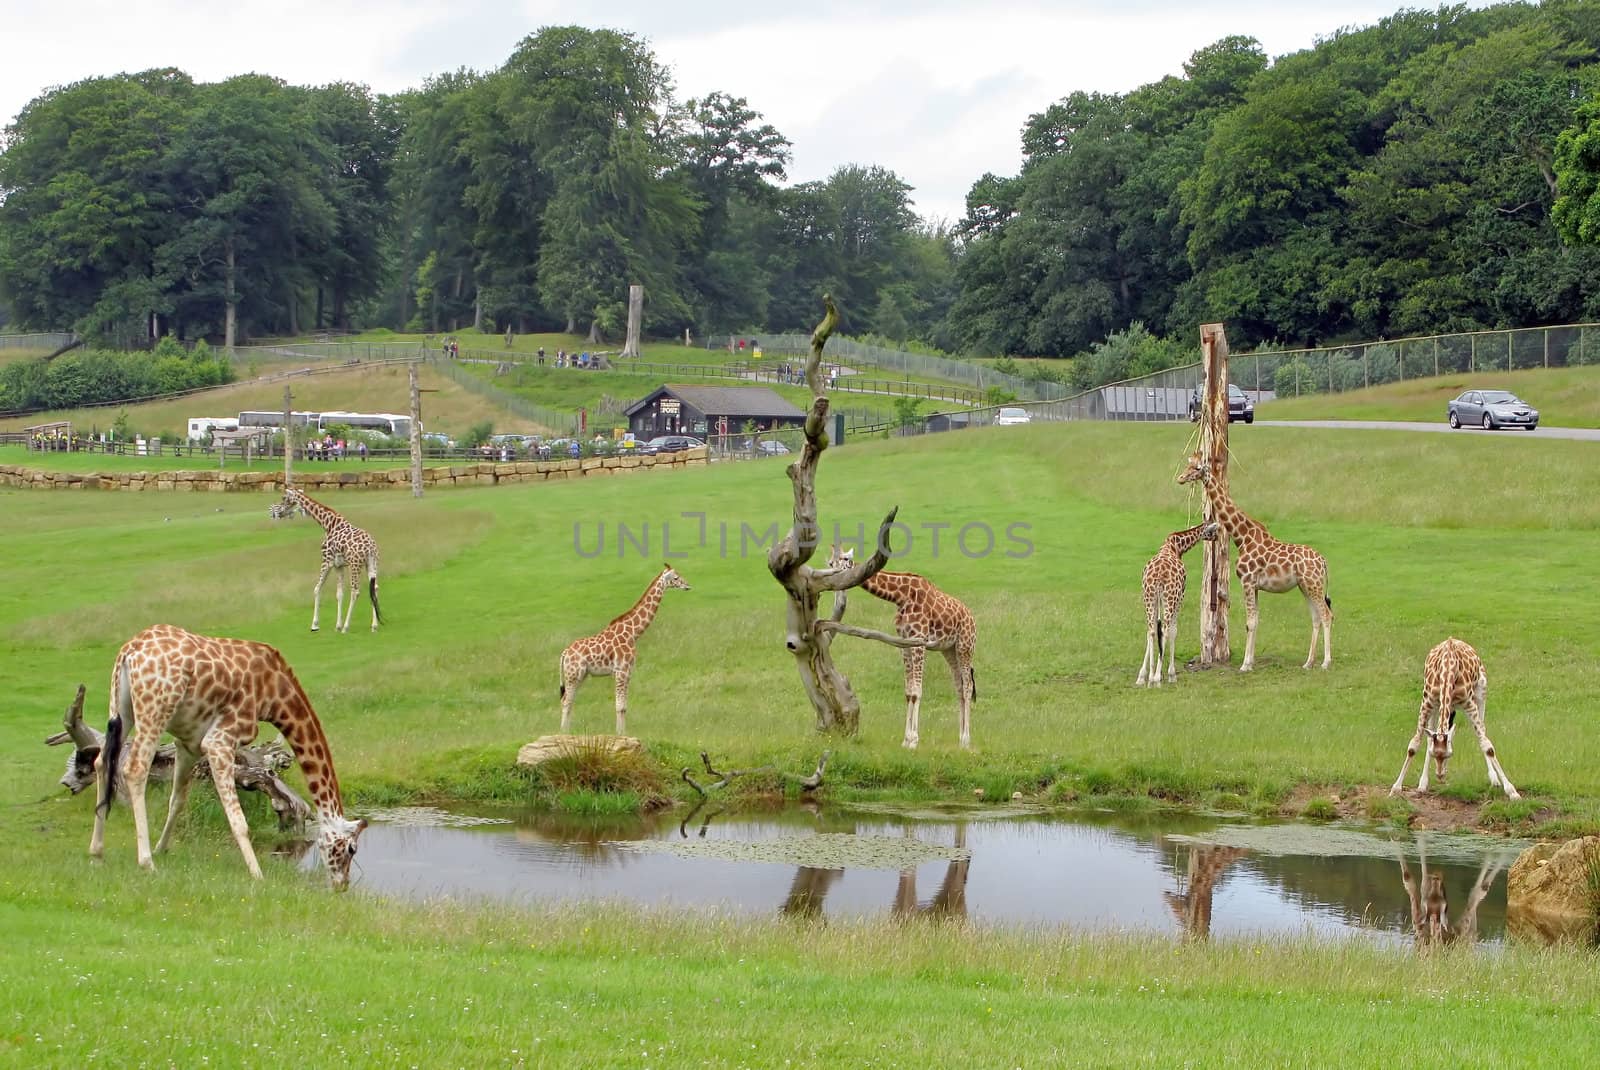 A few giraffes in a safari park.